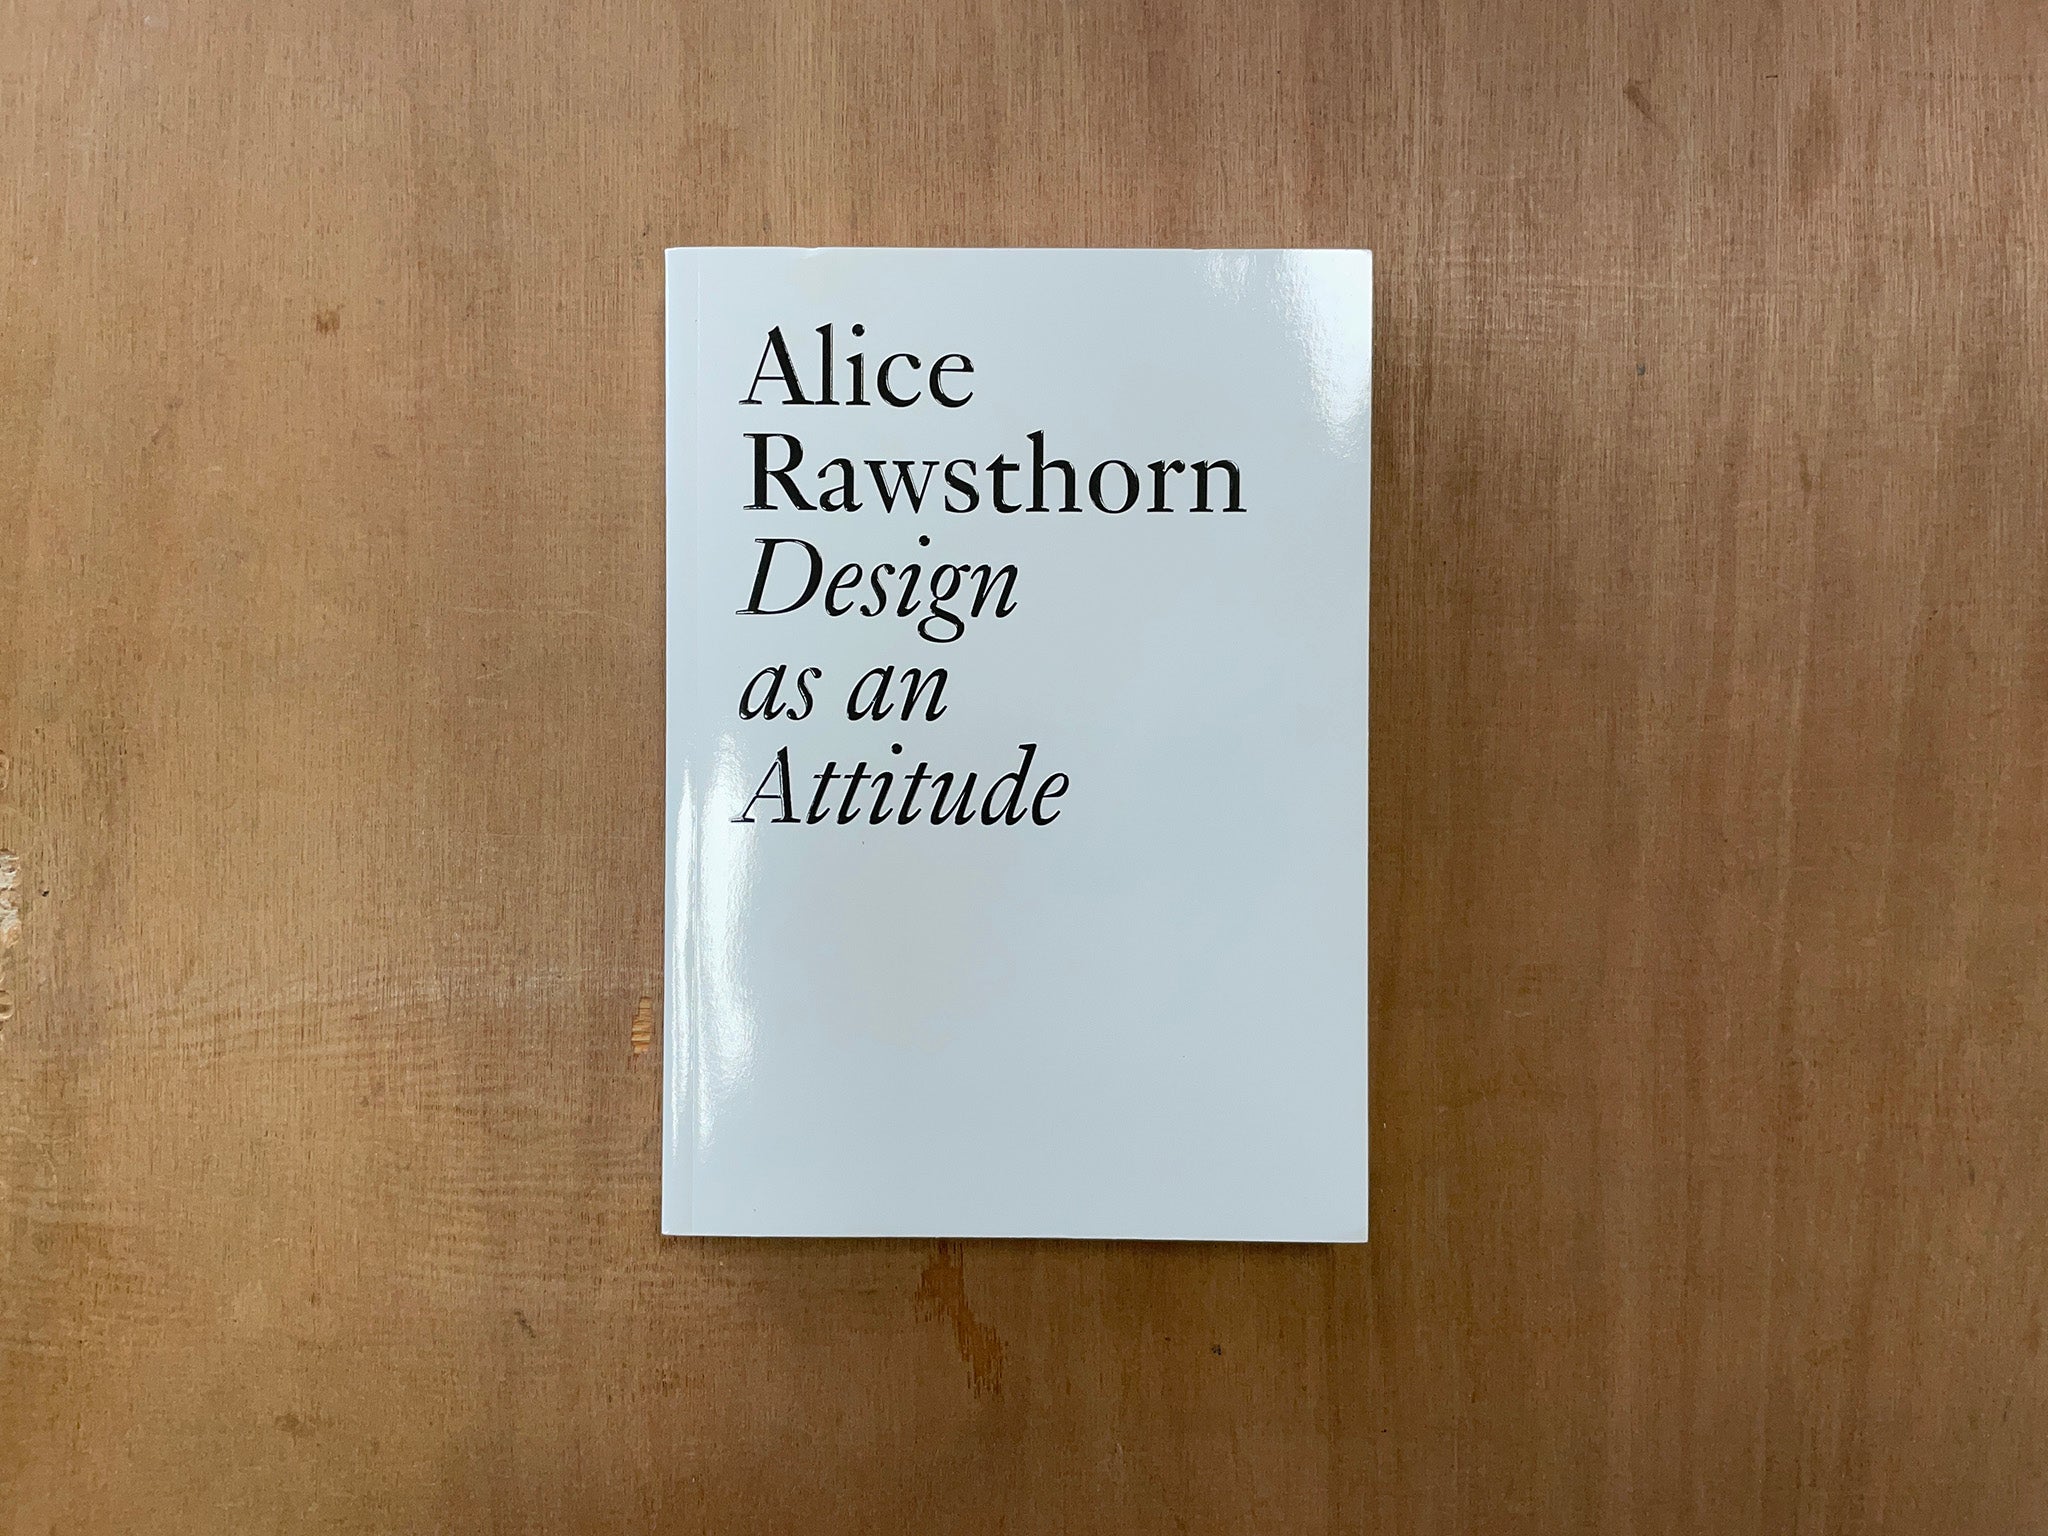 DESIGN AS AN ATTITUDE by Alice Rawsthorn